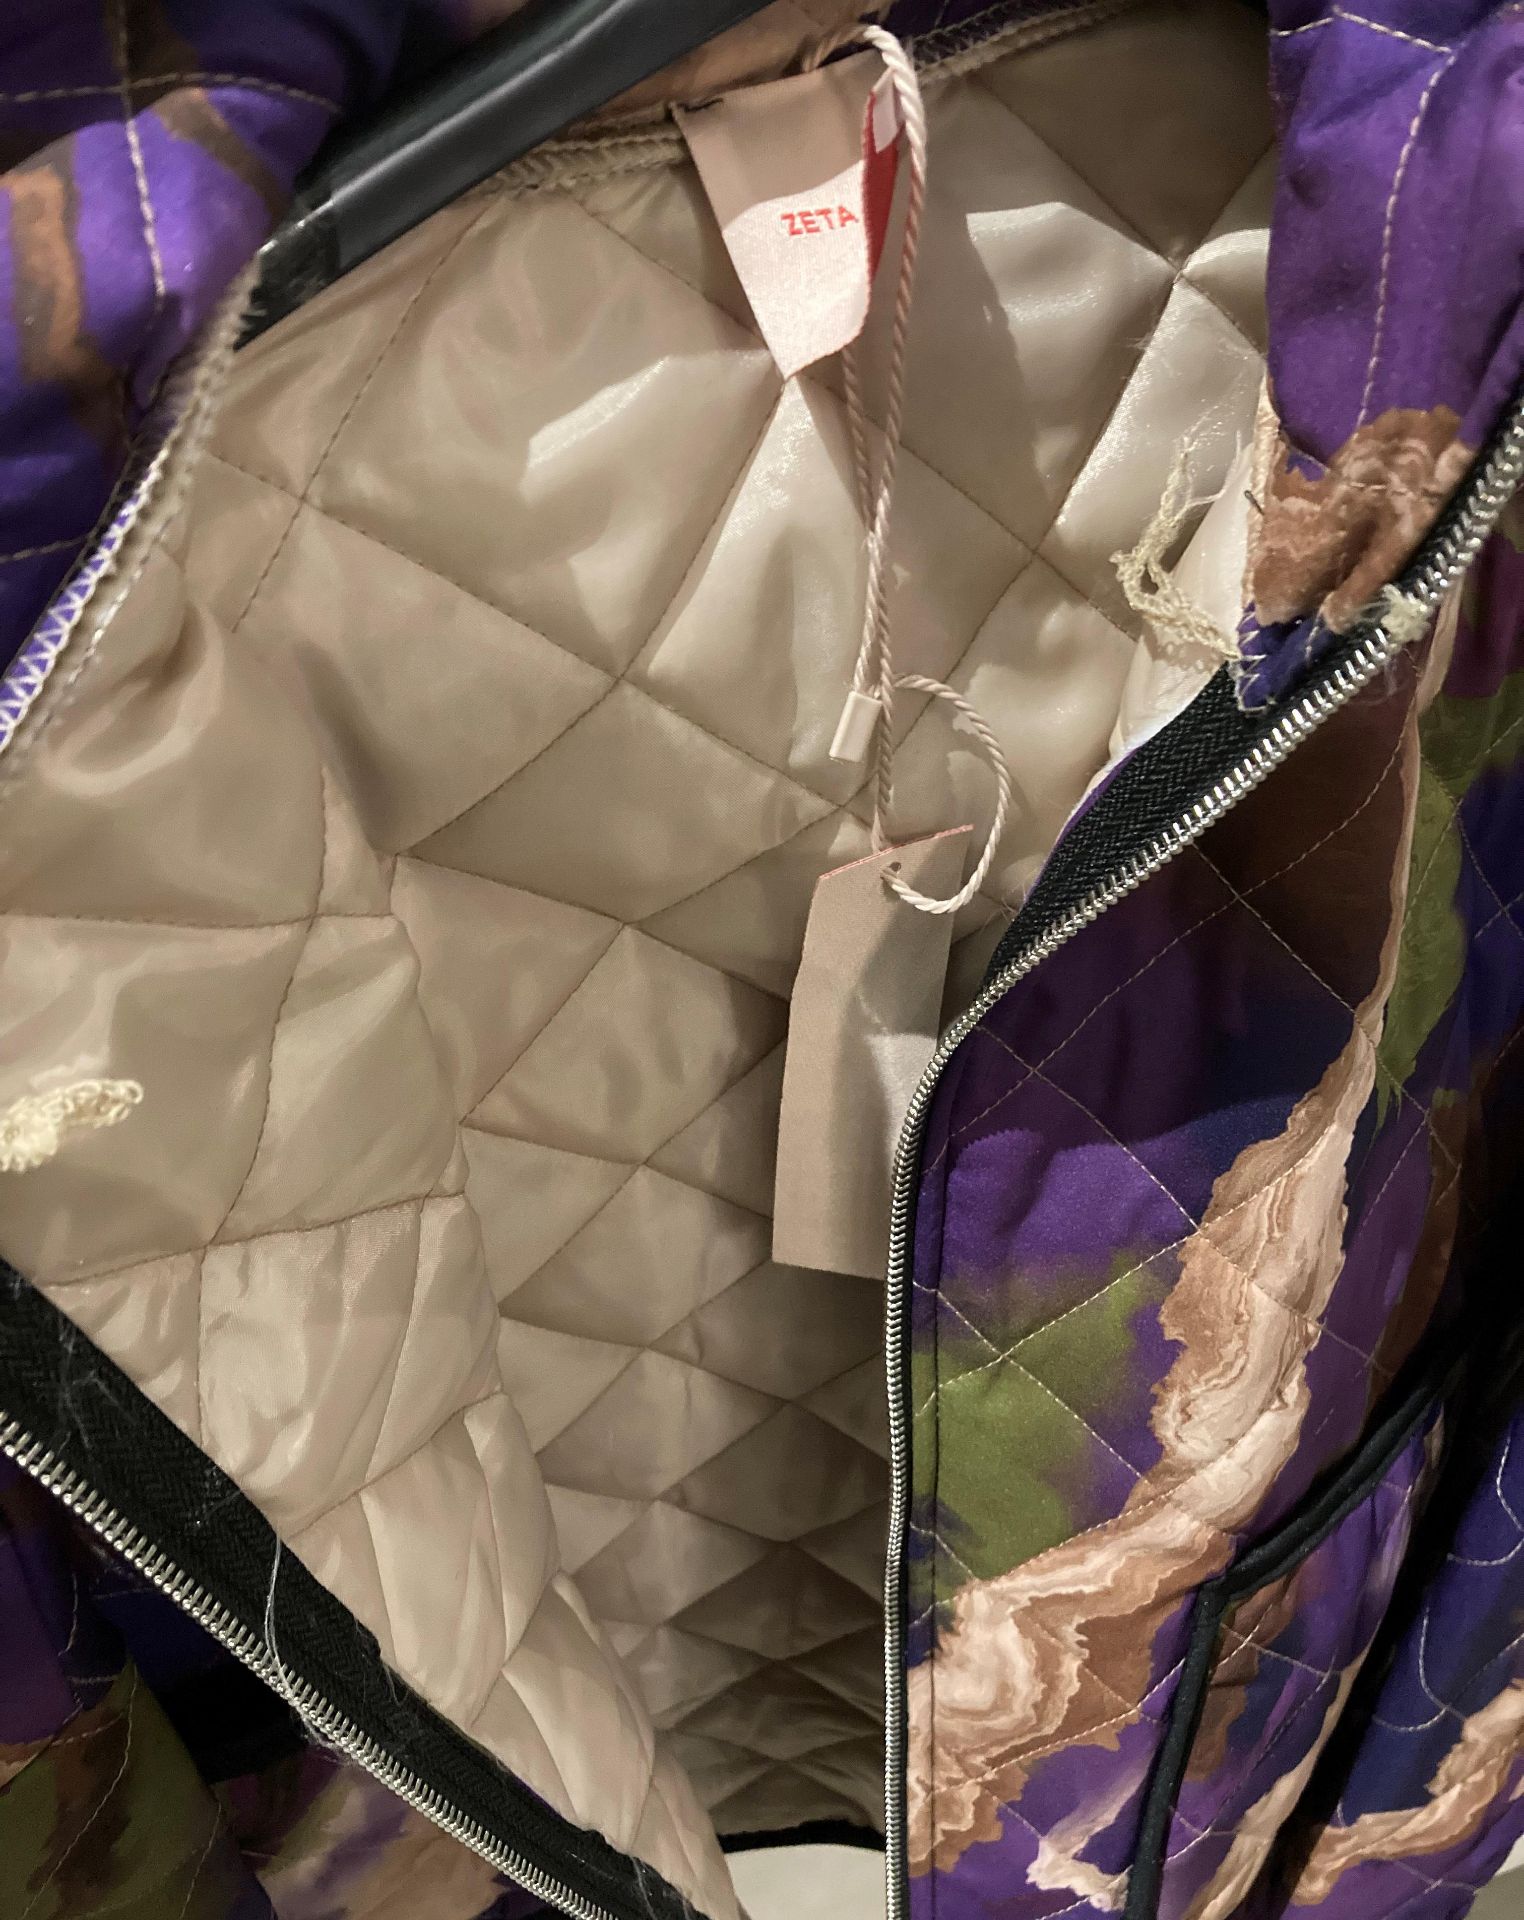 7 x Izeta Otto jackets with zip fastening in purple camo print, - Image 2 of 2